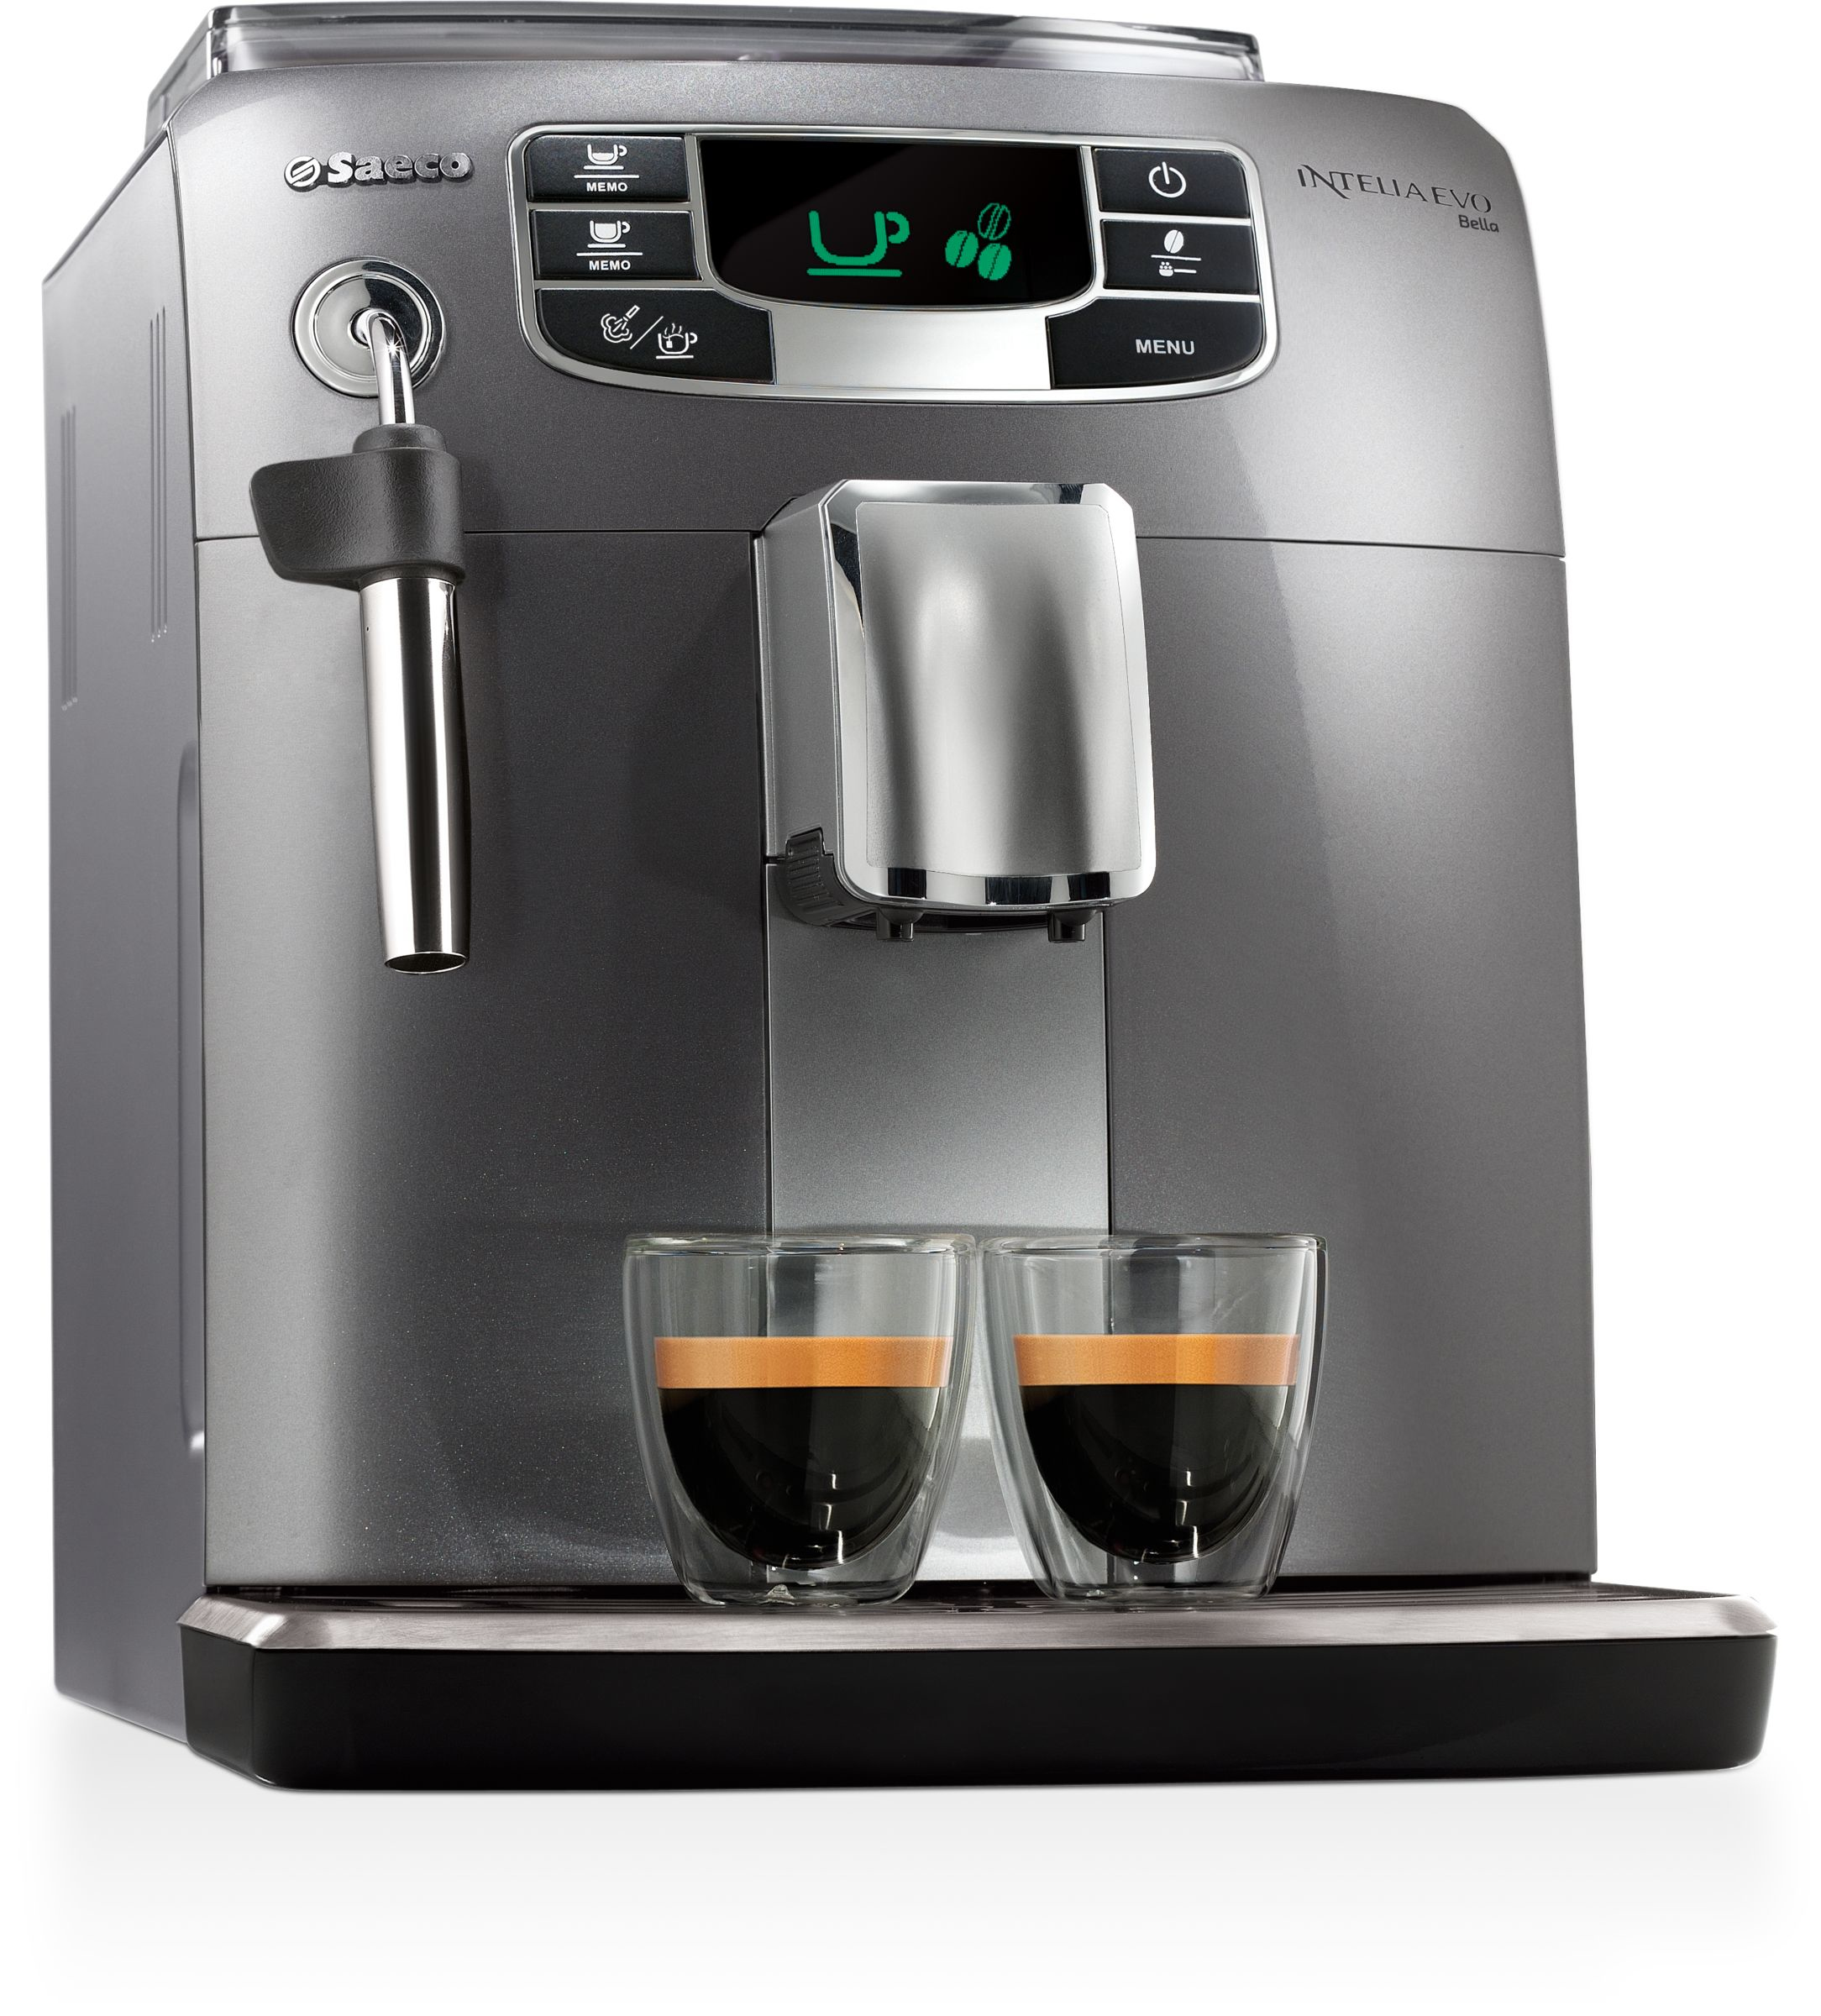 Saeco Intelia HD8770/01 coffee maker